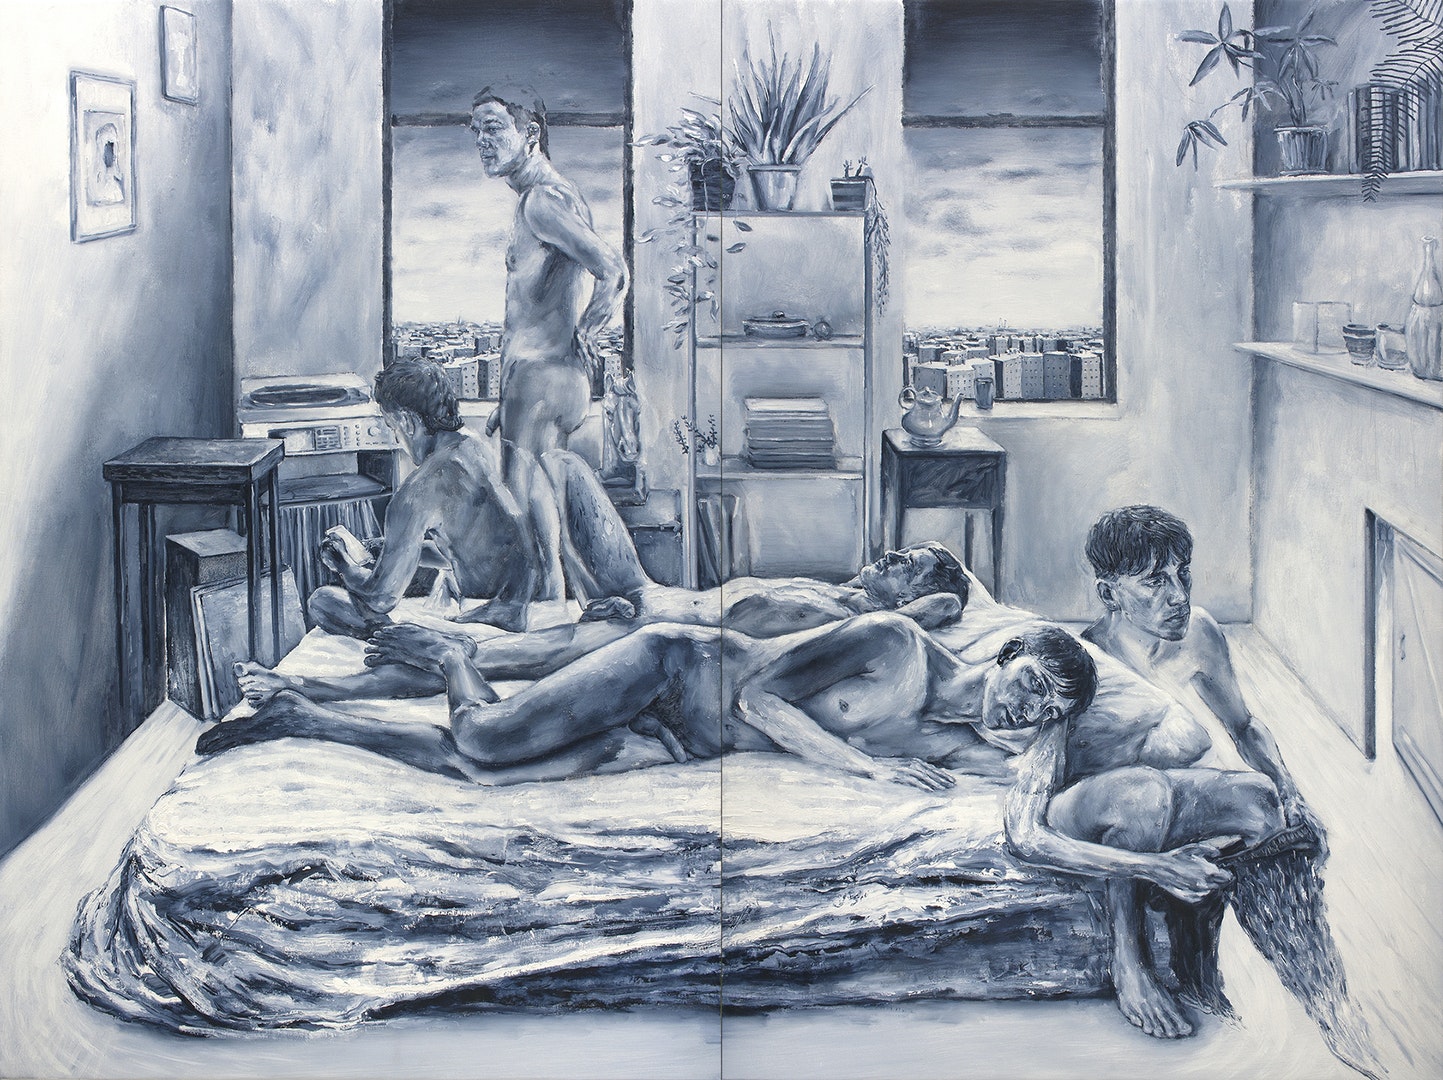 'I Me Mine', Adam Lupton, Oil on canvas, 152 x 203 cm